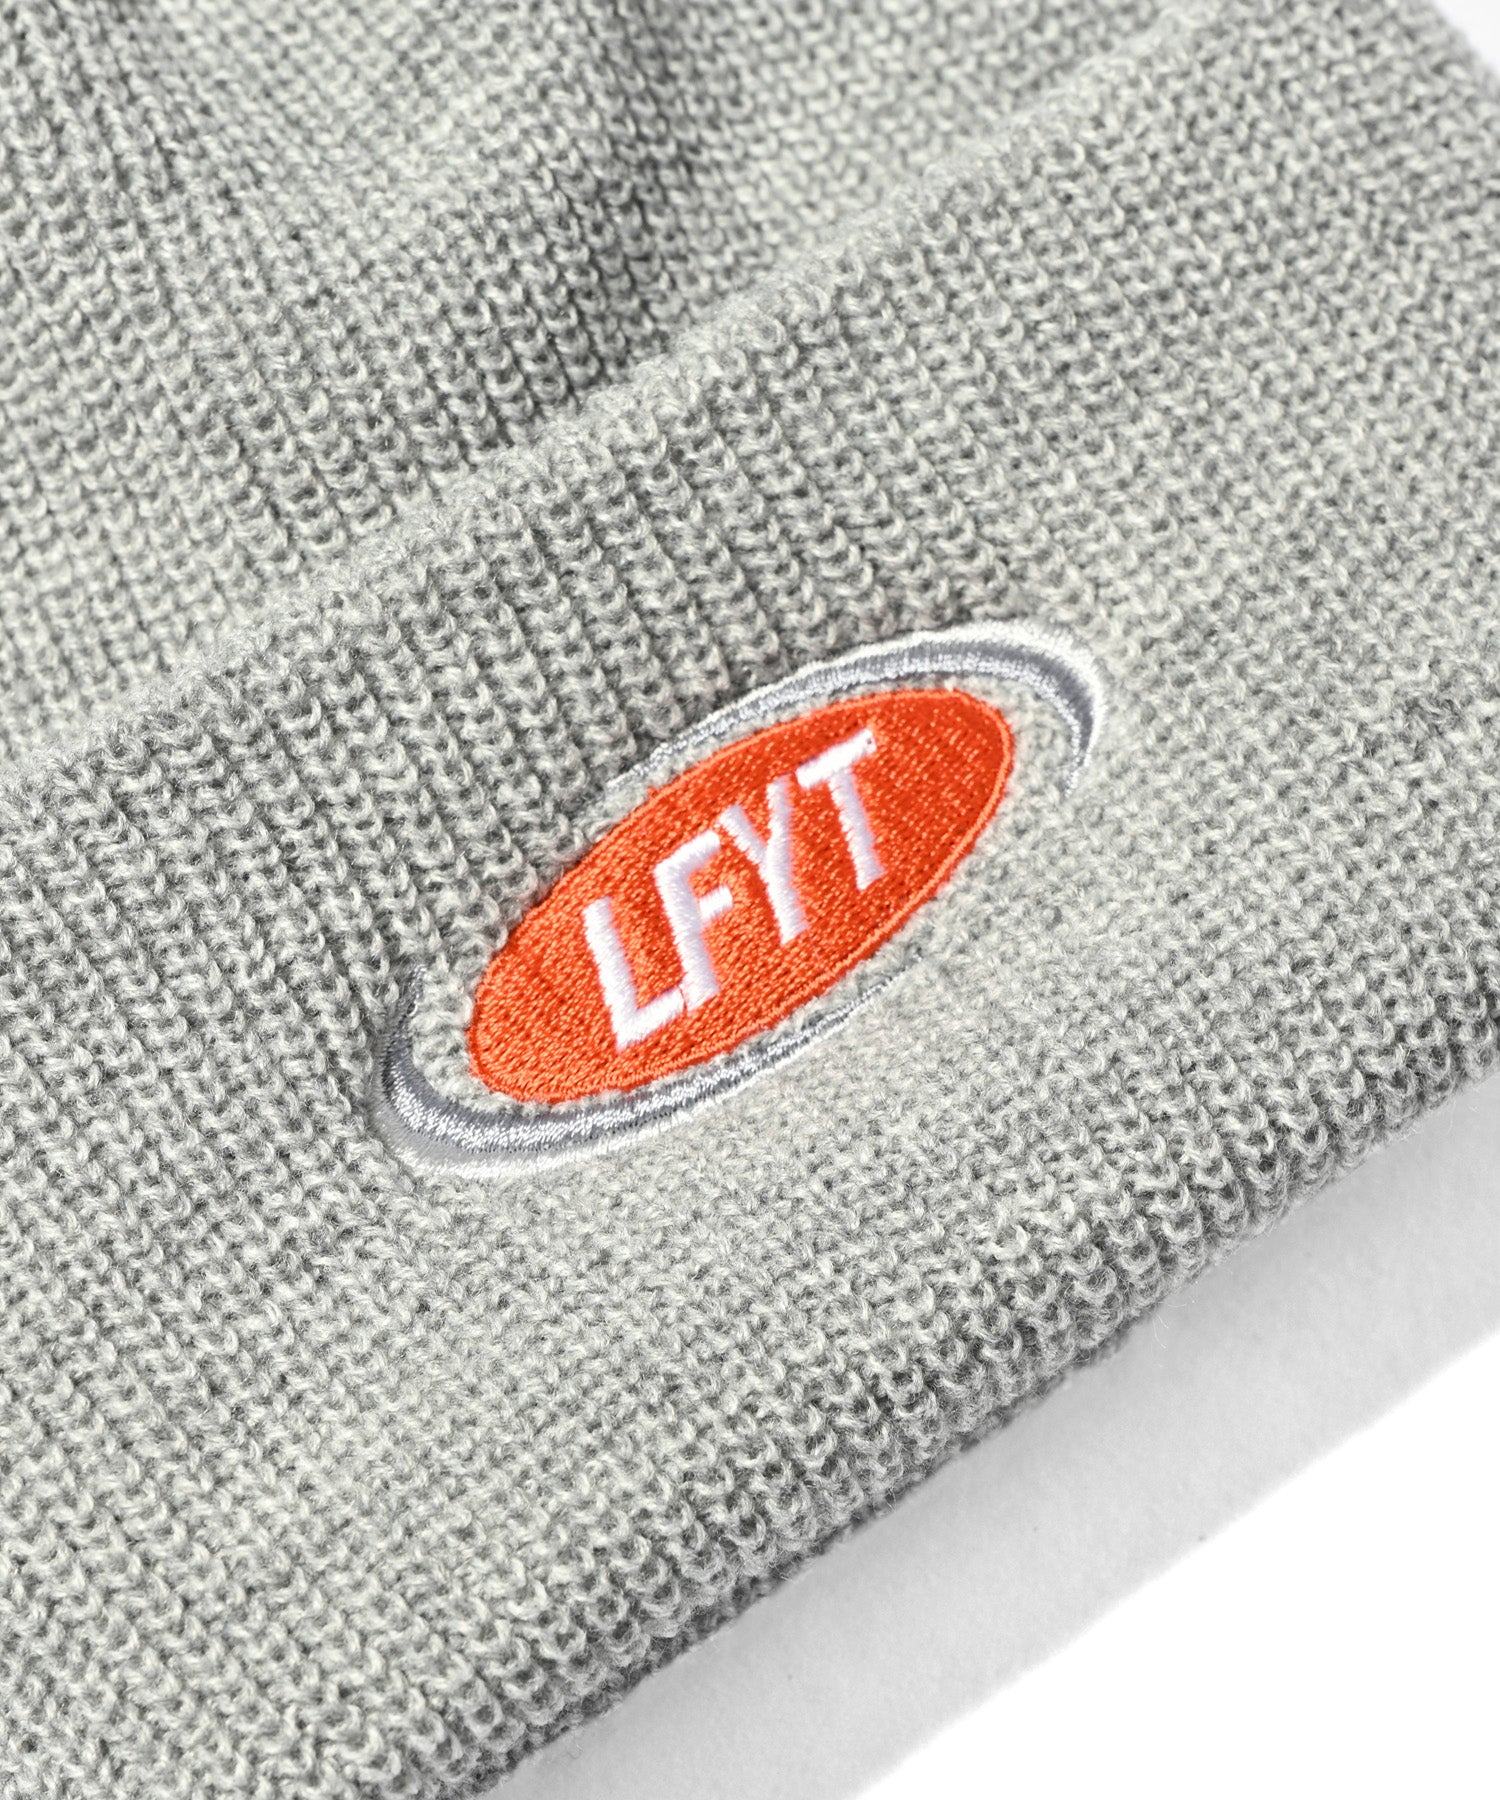 LFYT 橢圓形標誌便帽 LS231404